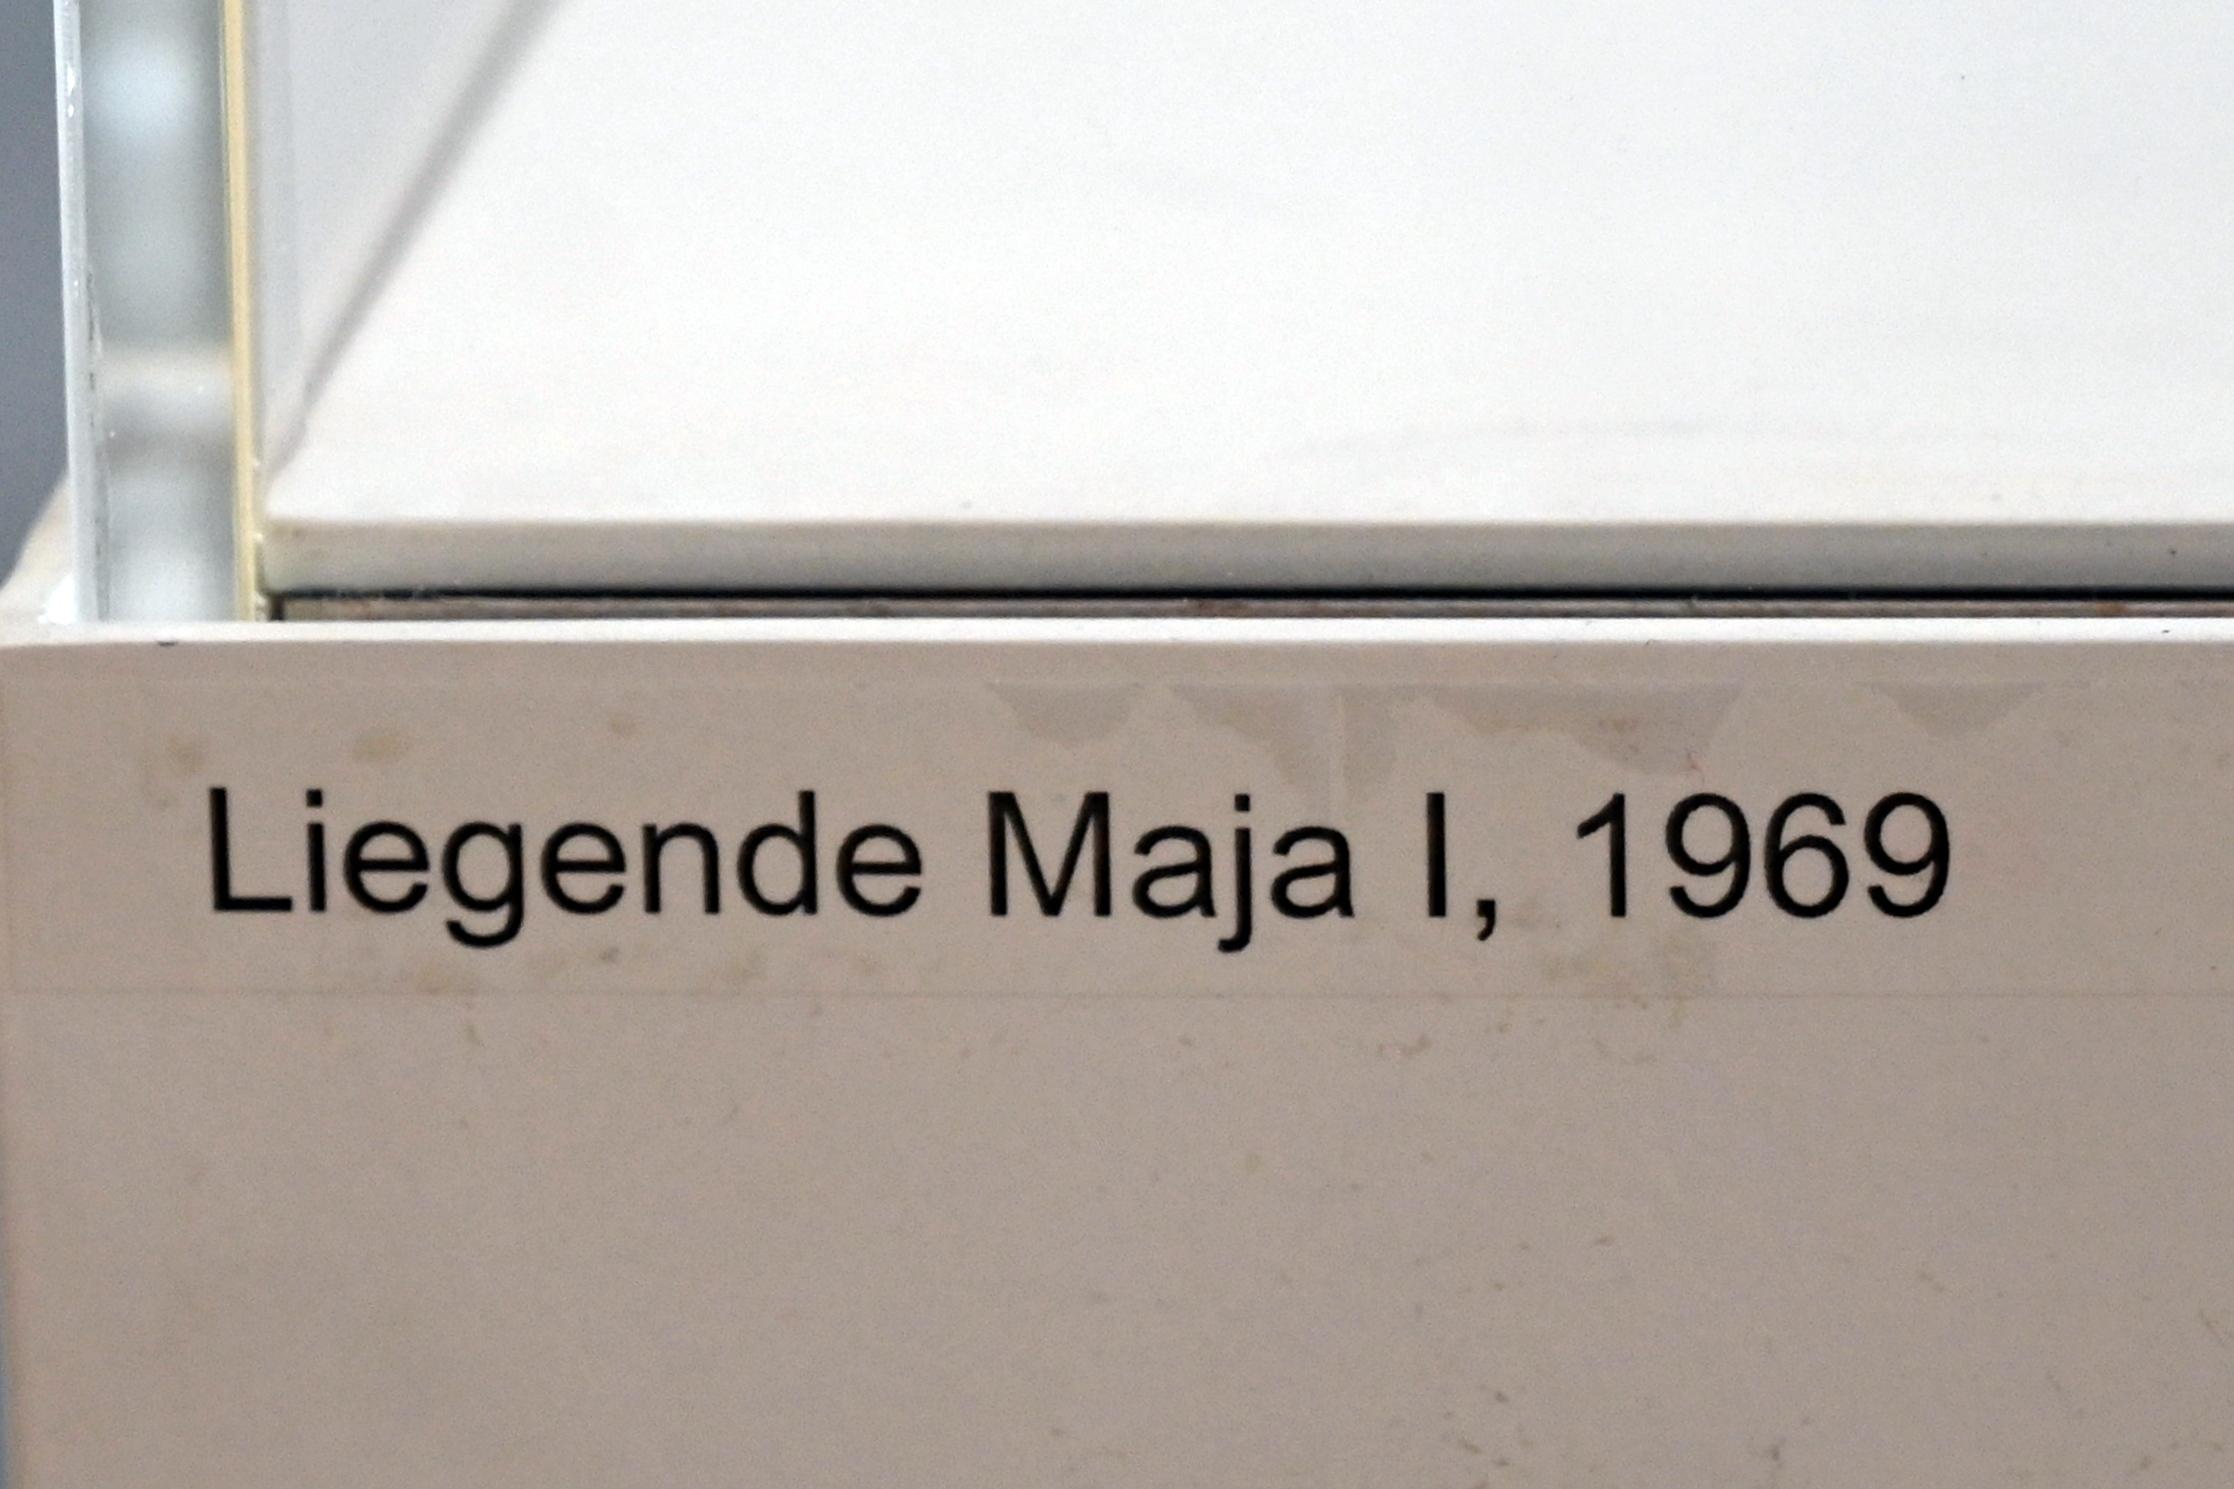 Lothar Fischer (1959–2004), Liegende Maja I, Neumarkt in der Oberpfalz, Museum Lothar Fischer, Obergeschoß Raum 6, 1969, Bild 5/5